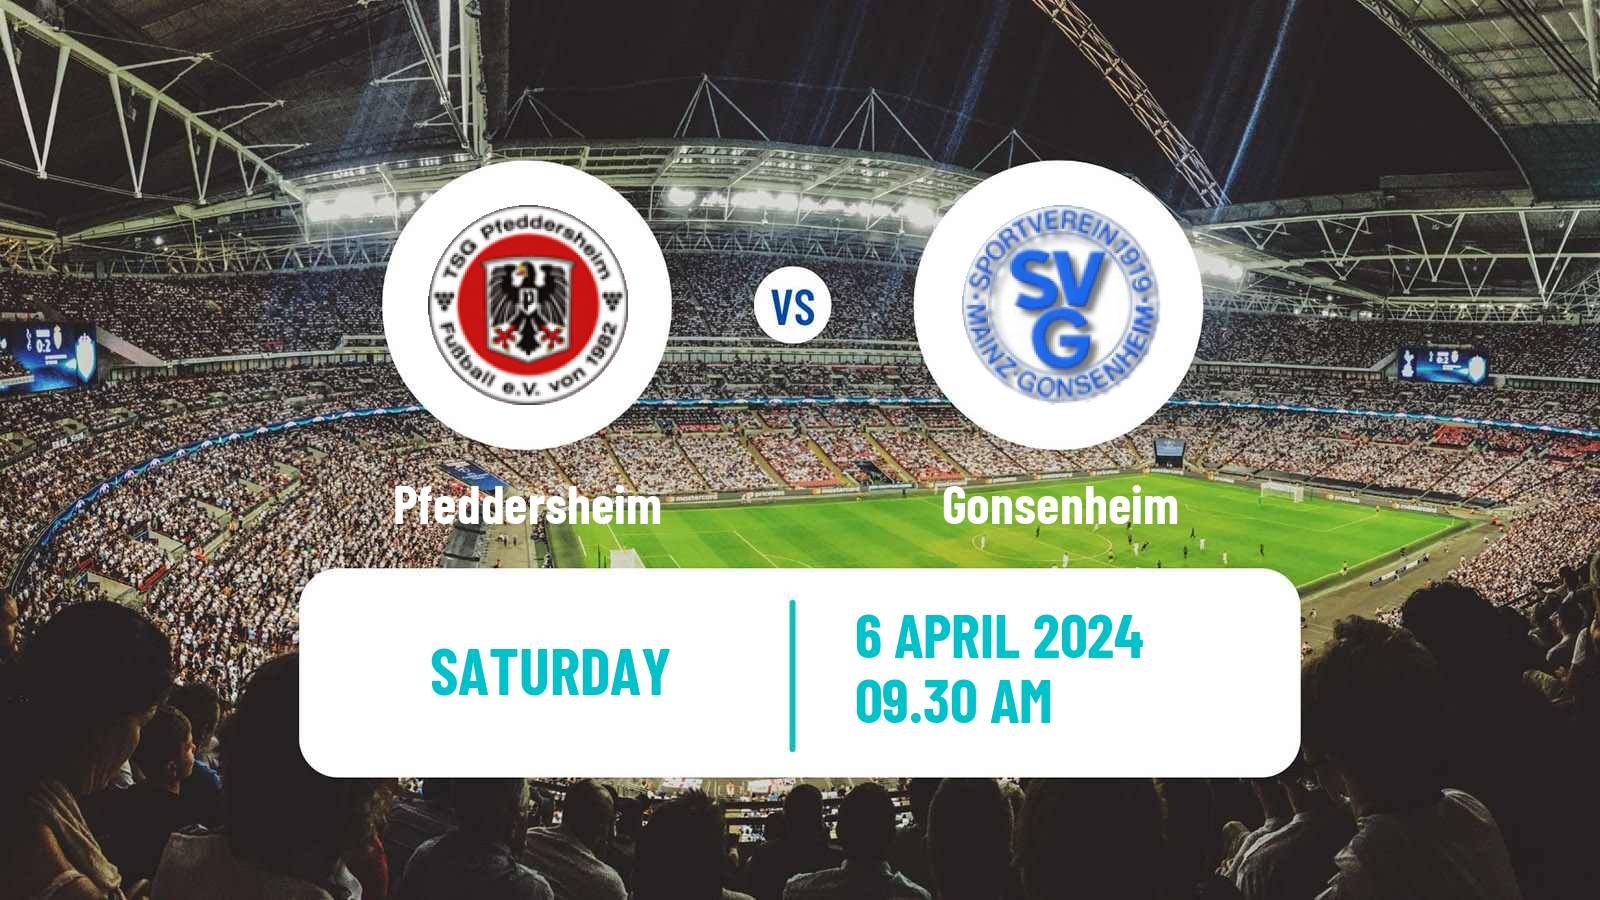 Soccer German Oberliga Rheinland-Pfalz/Saar Pfeddersheim - Gonsenheim